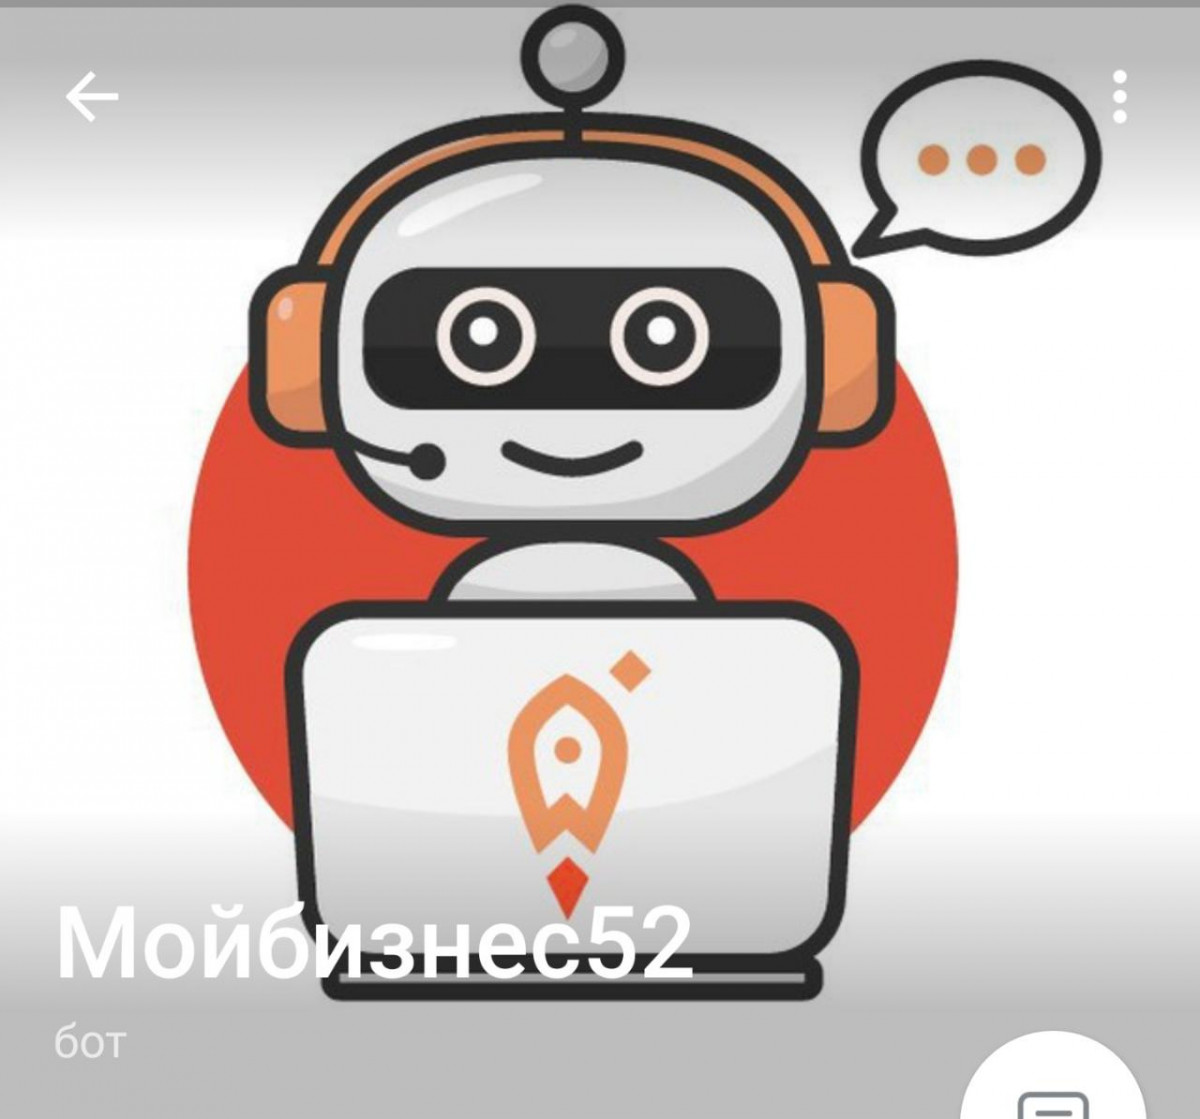 Чат-бот «Мойбизнес52» запустили в Telegram